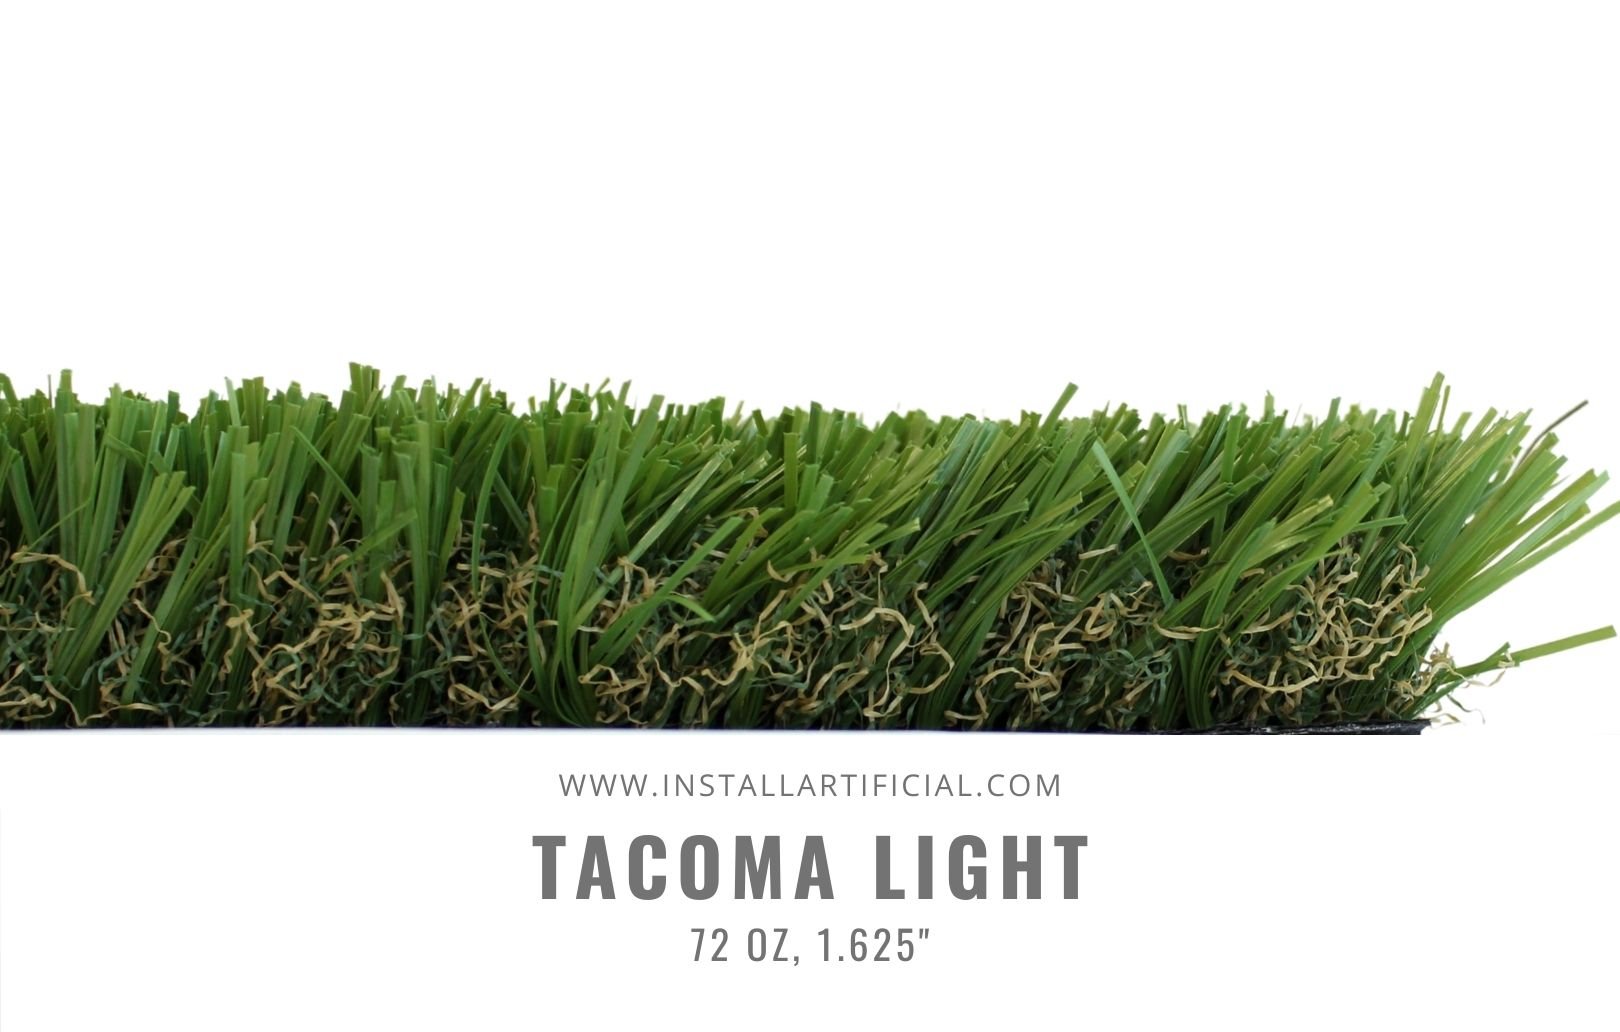 Tacoma Light, Synthetic Grass Warehouse, Everlast, side